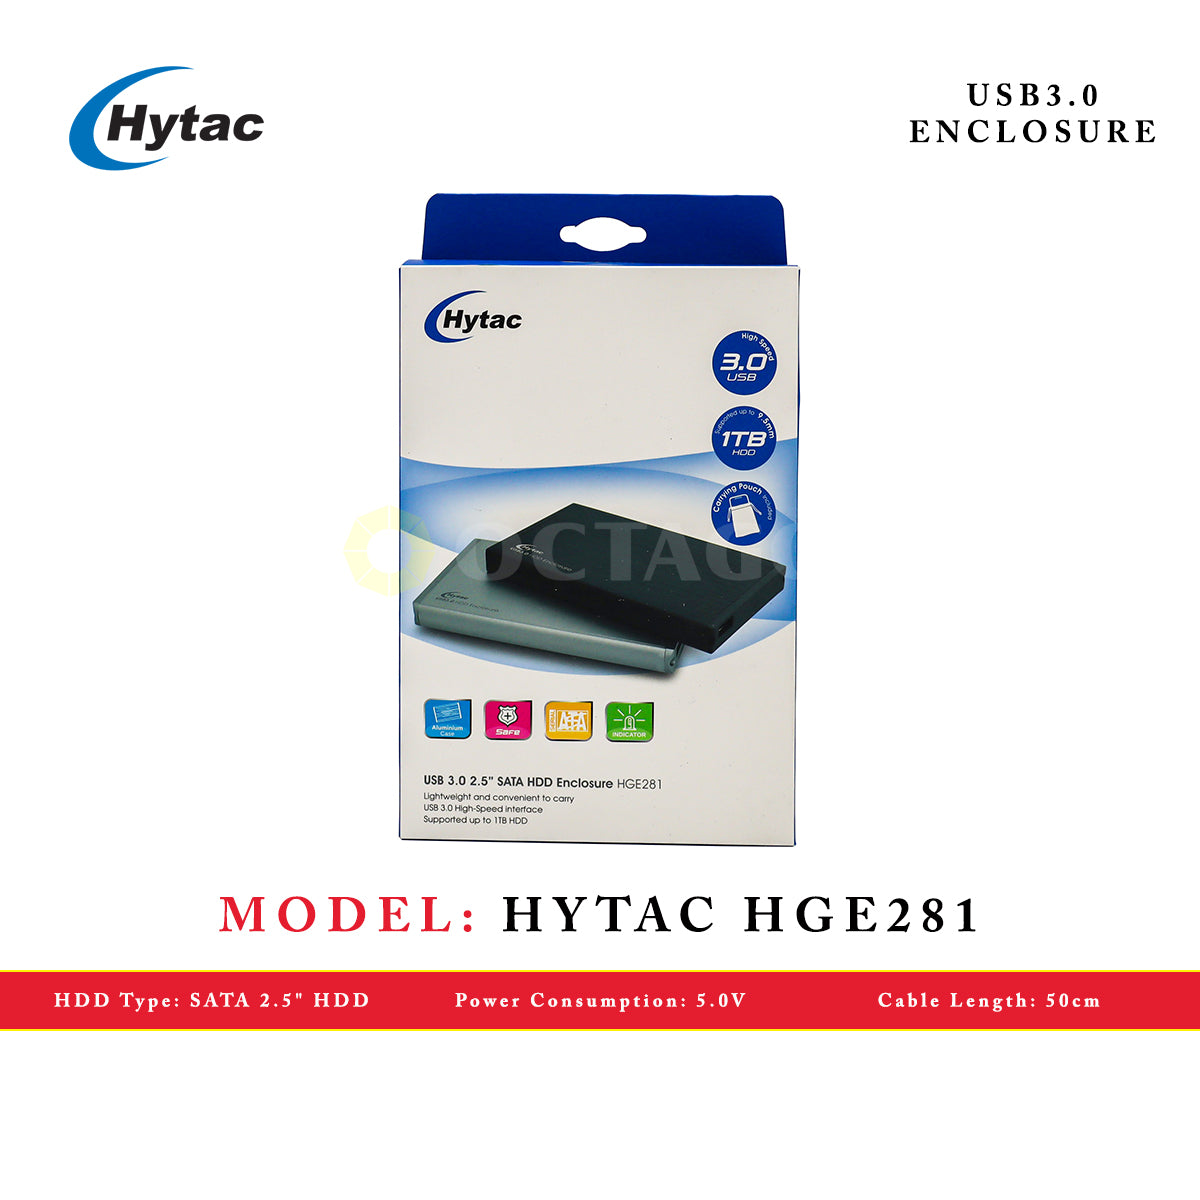 HYTAC HGE281 SILVER USB3.0 ENCLOSURE